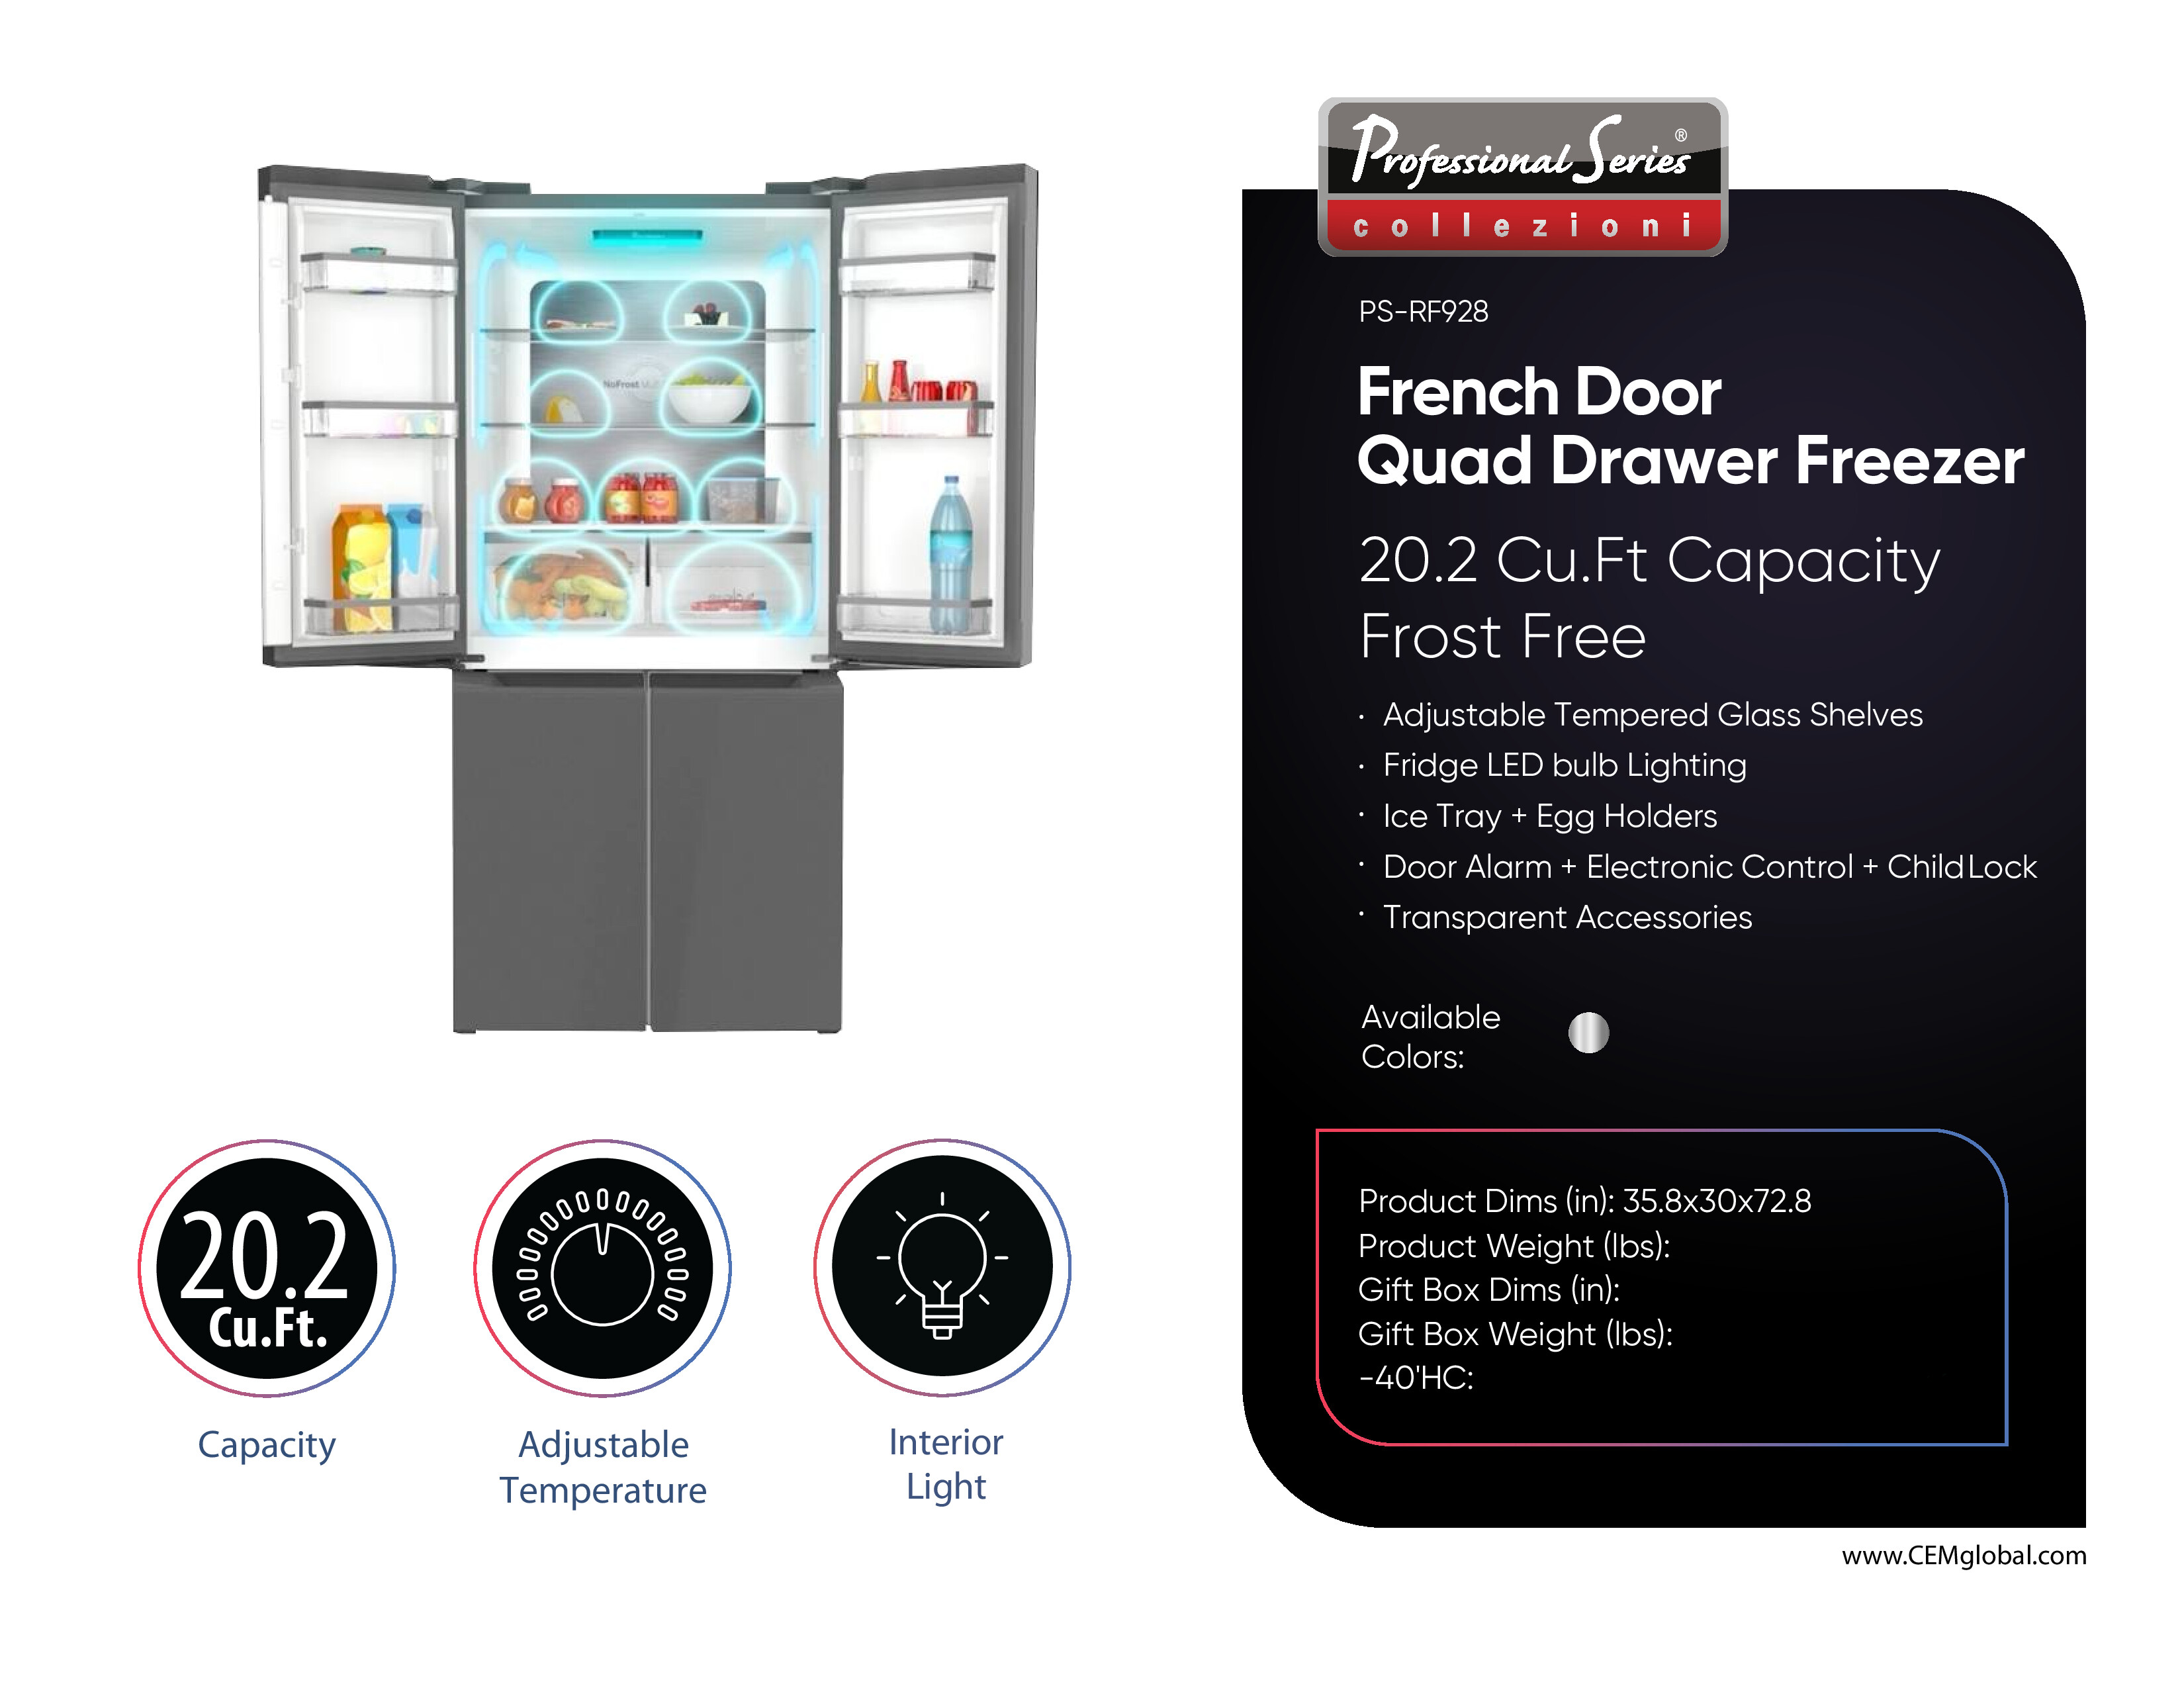 French Door Quad Drawer Freezer